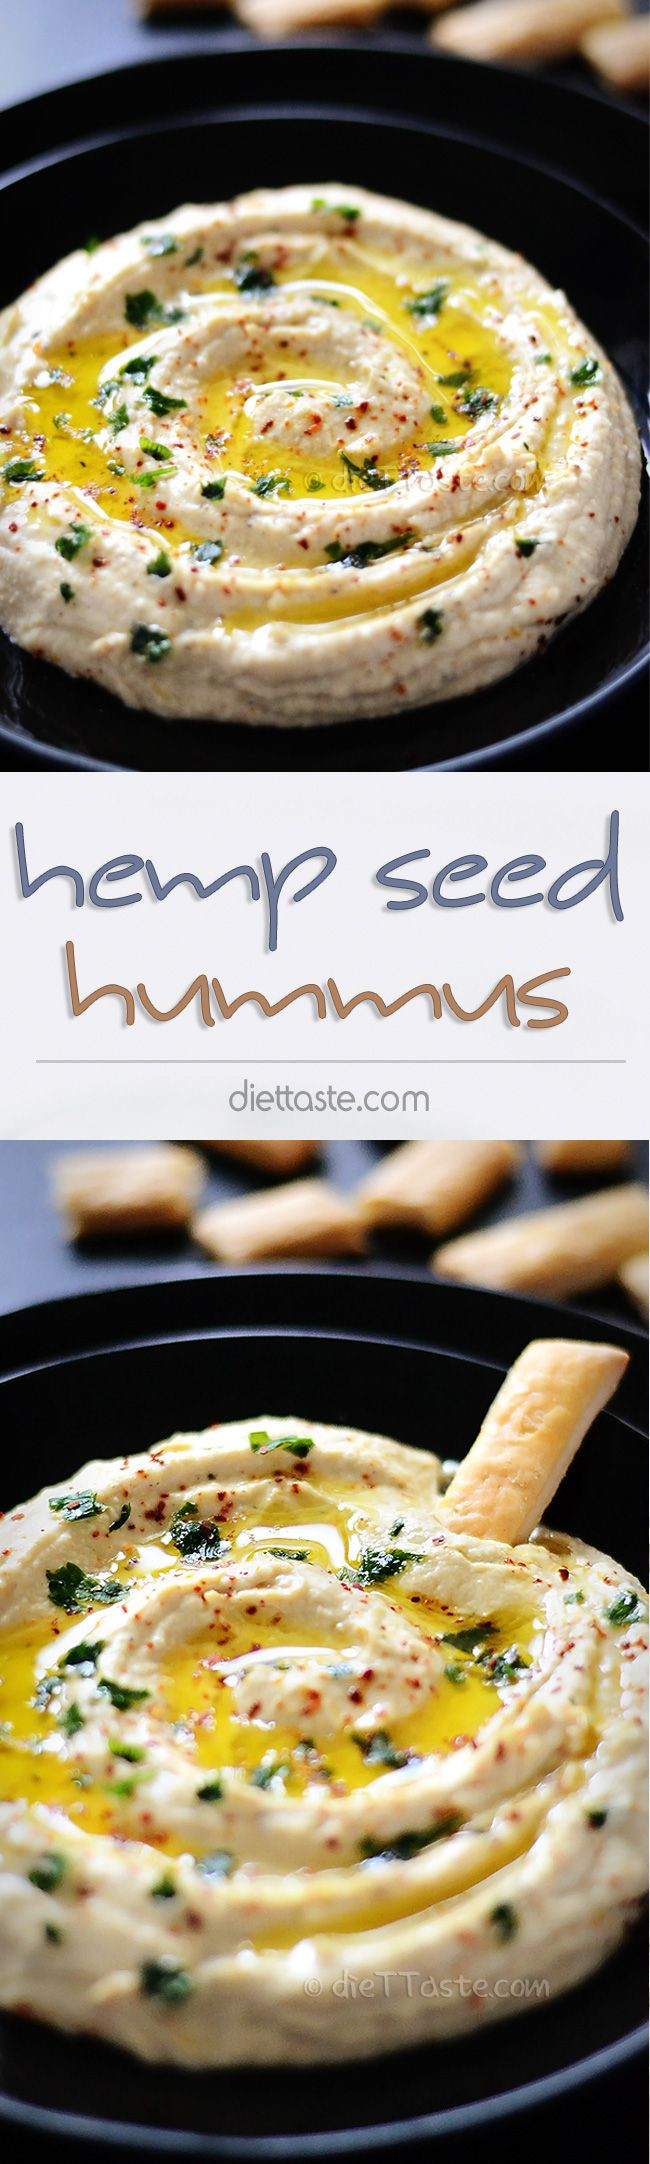 Low Carb Pita Bread Recipe
 Hemp Seed Hummus vegan low carb with healthy fats